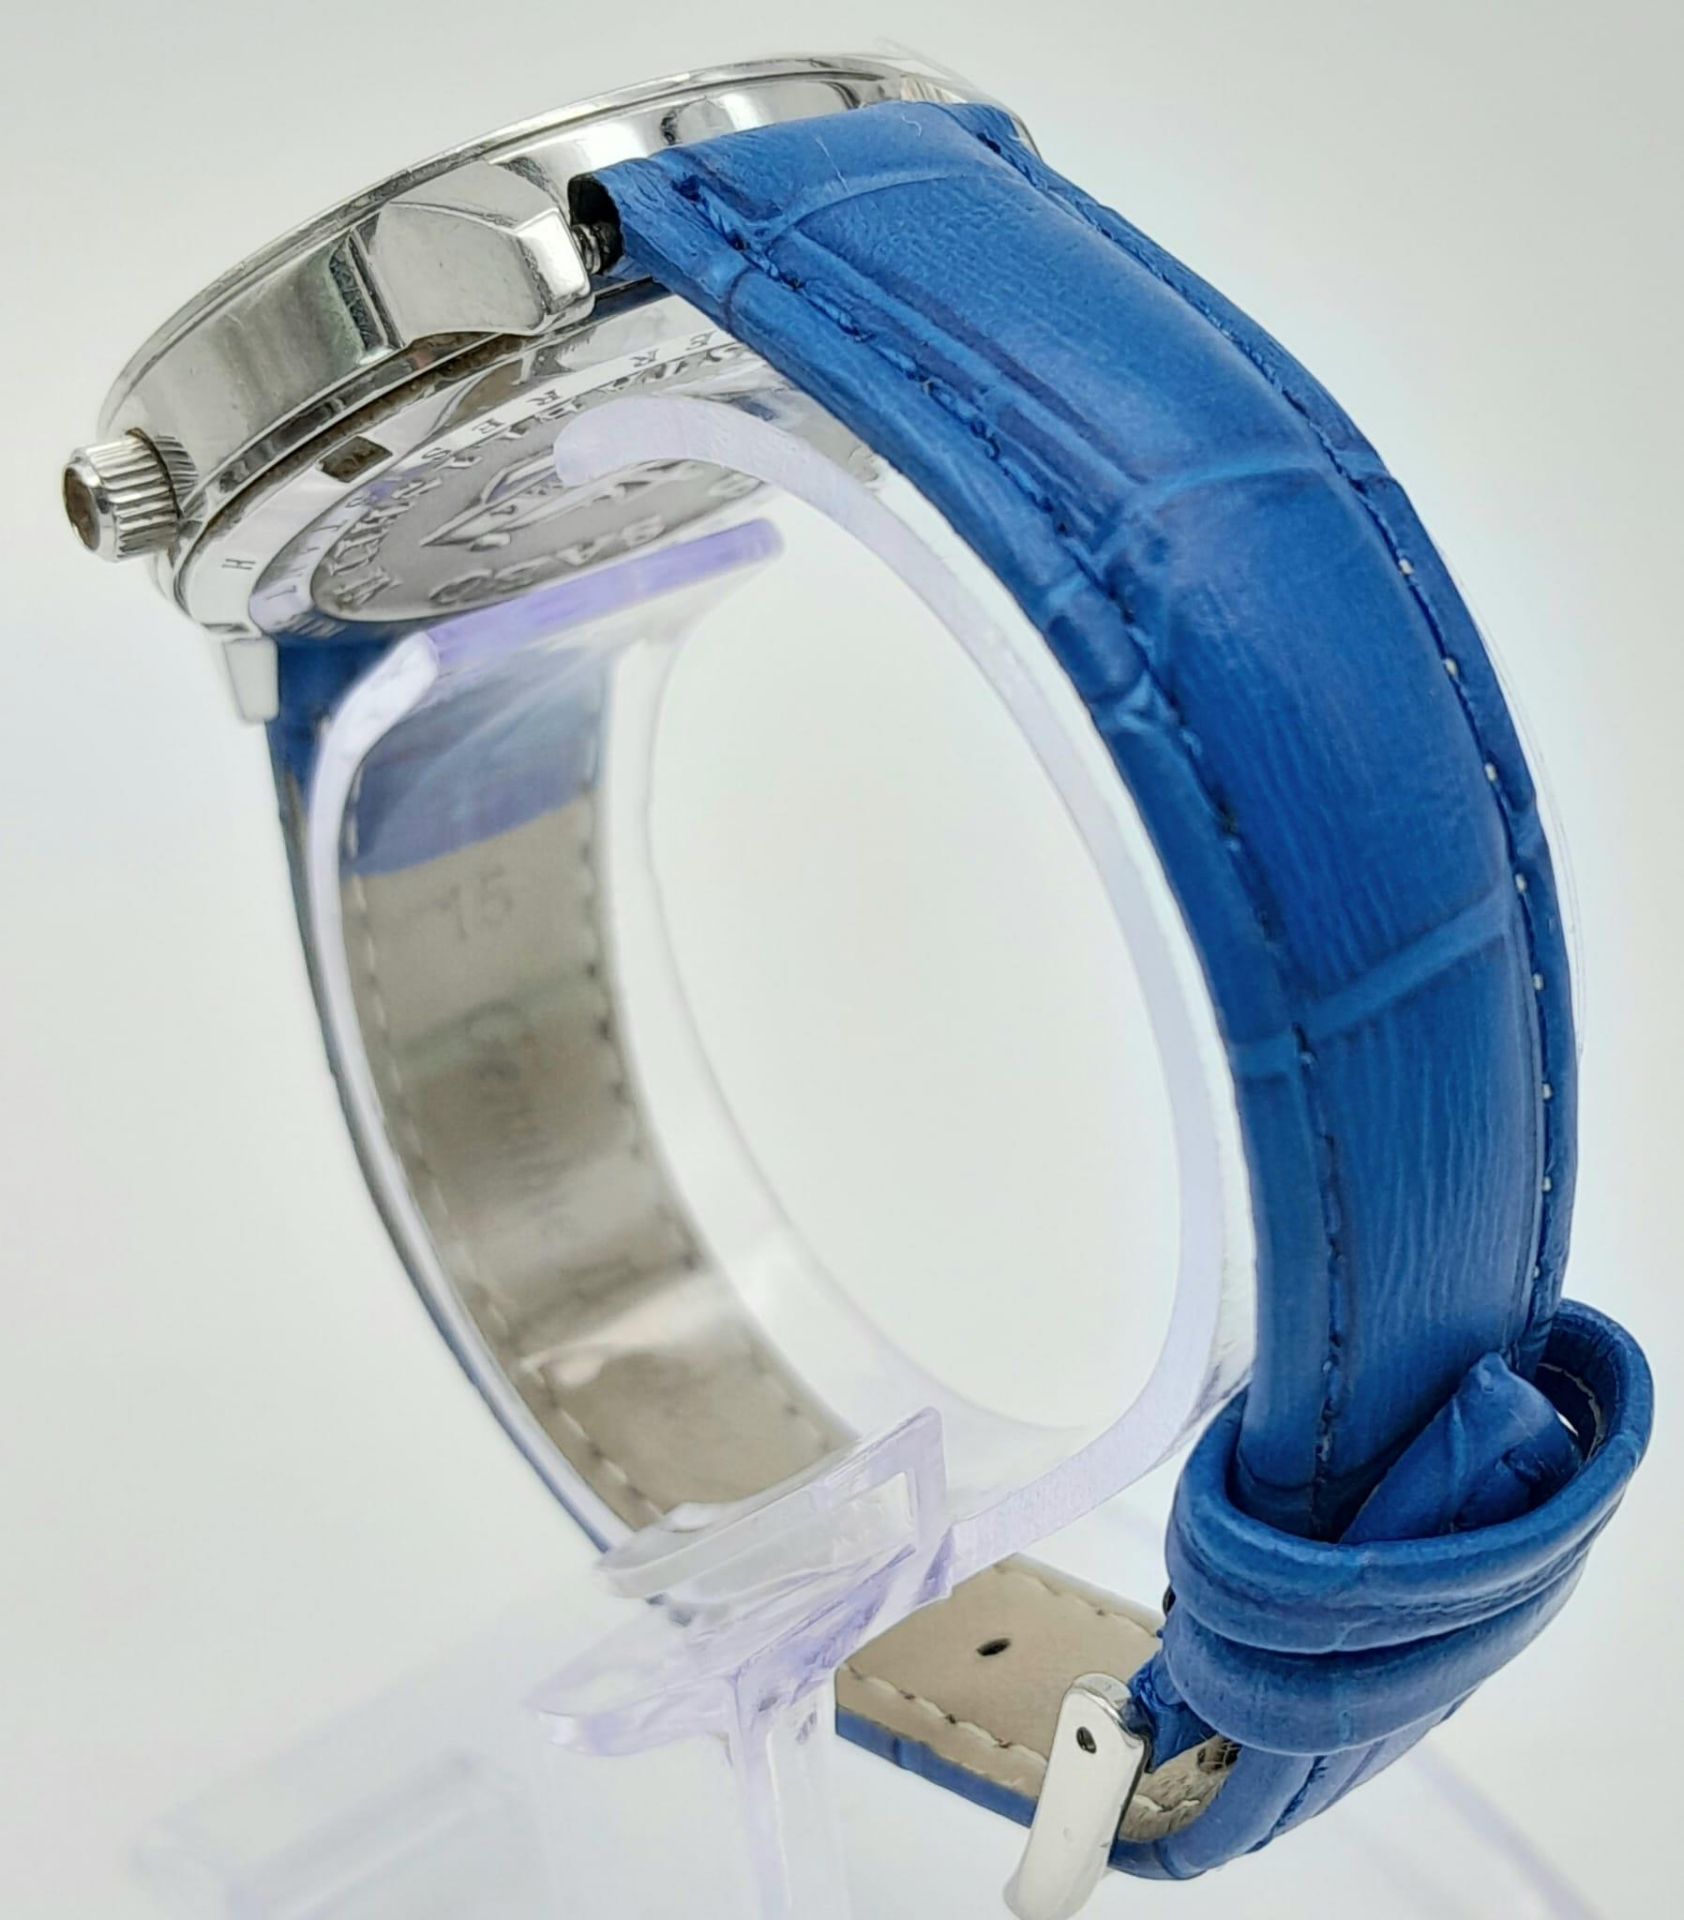 Thomas Sabo Designer Quartz Watch Model WA0248. 35mm Case. Full Working Order. Replacement Battery - Image 4 of 7